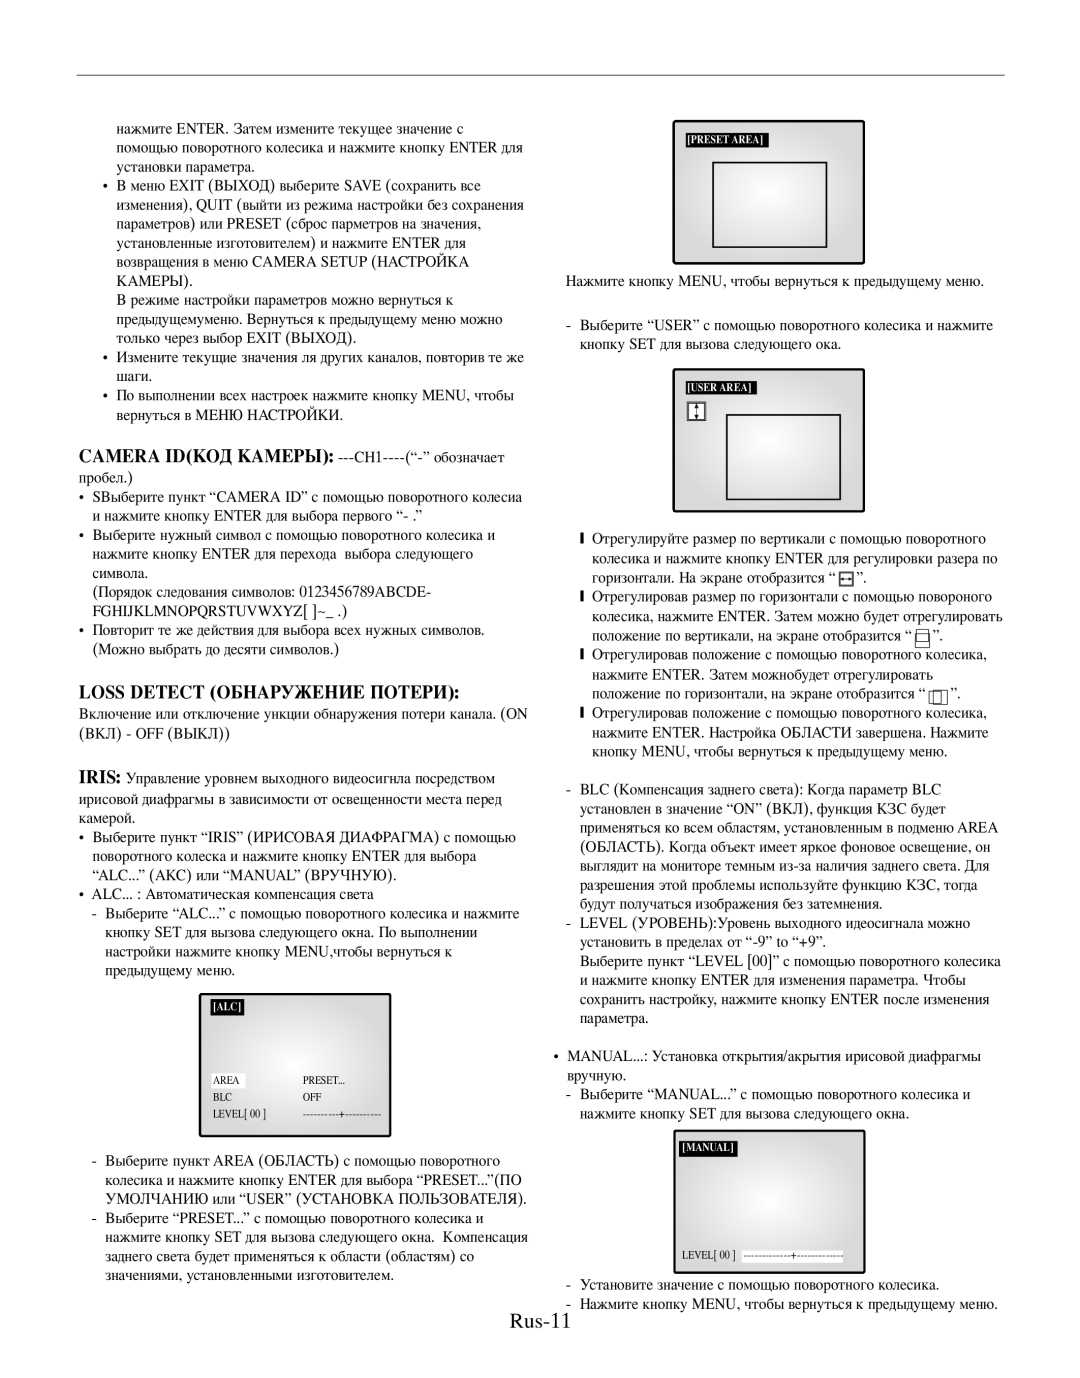 Samsung SMO-210MP/UMG, SMO-210TRP manual Rus-11, Camera Idо, Loss Detect Оу 